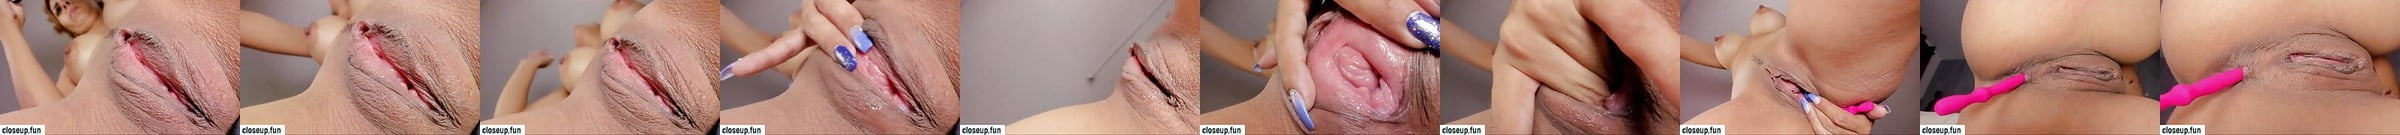 My Best Dripping Wet Pussy Compilation Slowmen17 Porn